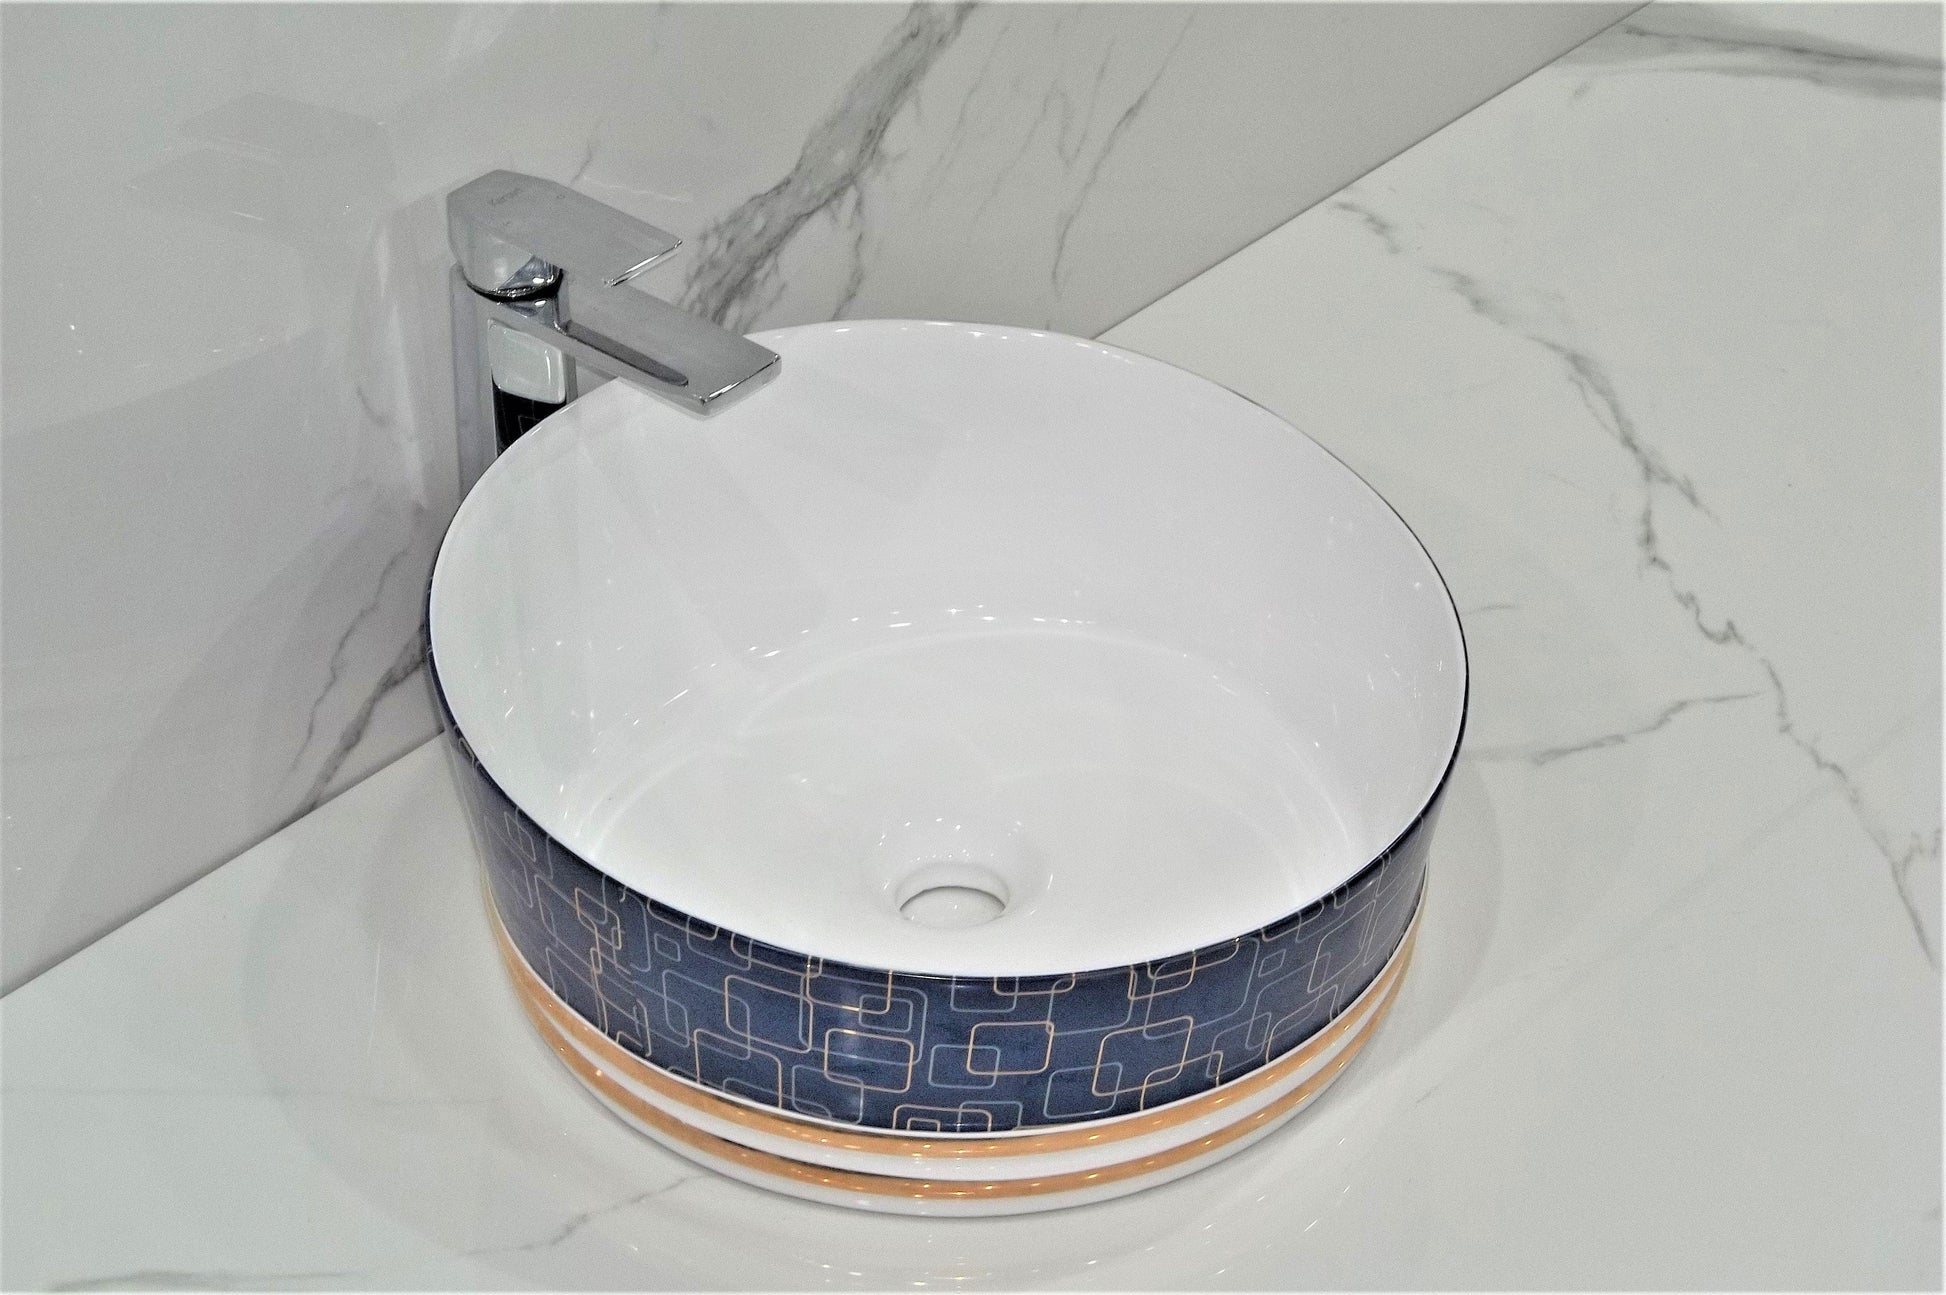 Table Top Premium Designer Ceramic Wash Basin/Vessel Round Blue White Designer for Bathroom 16 x 16 x 6 Inch (Blue Color) - Bath Outlet